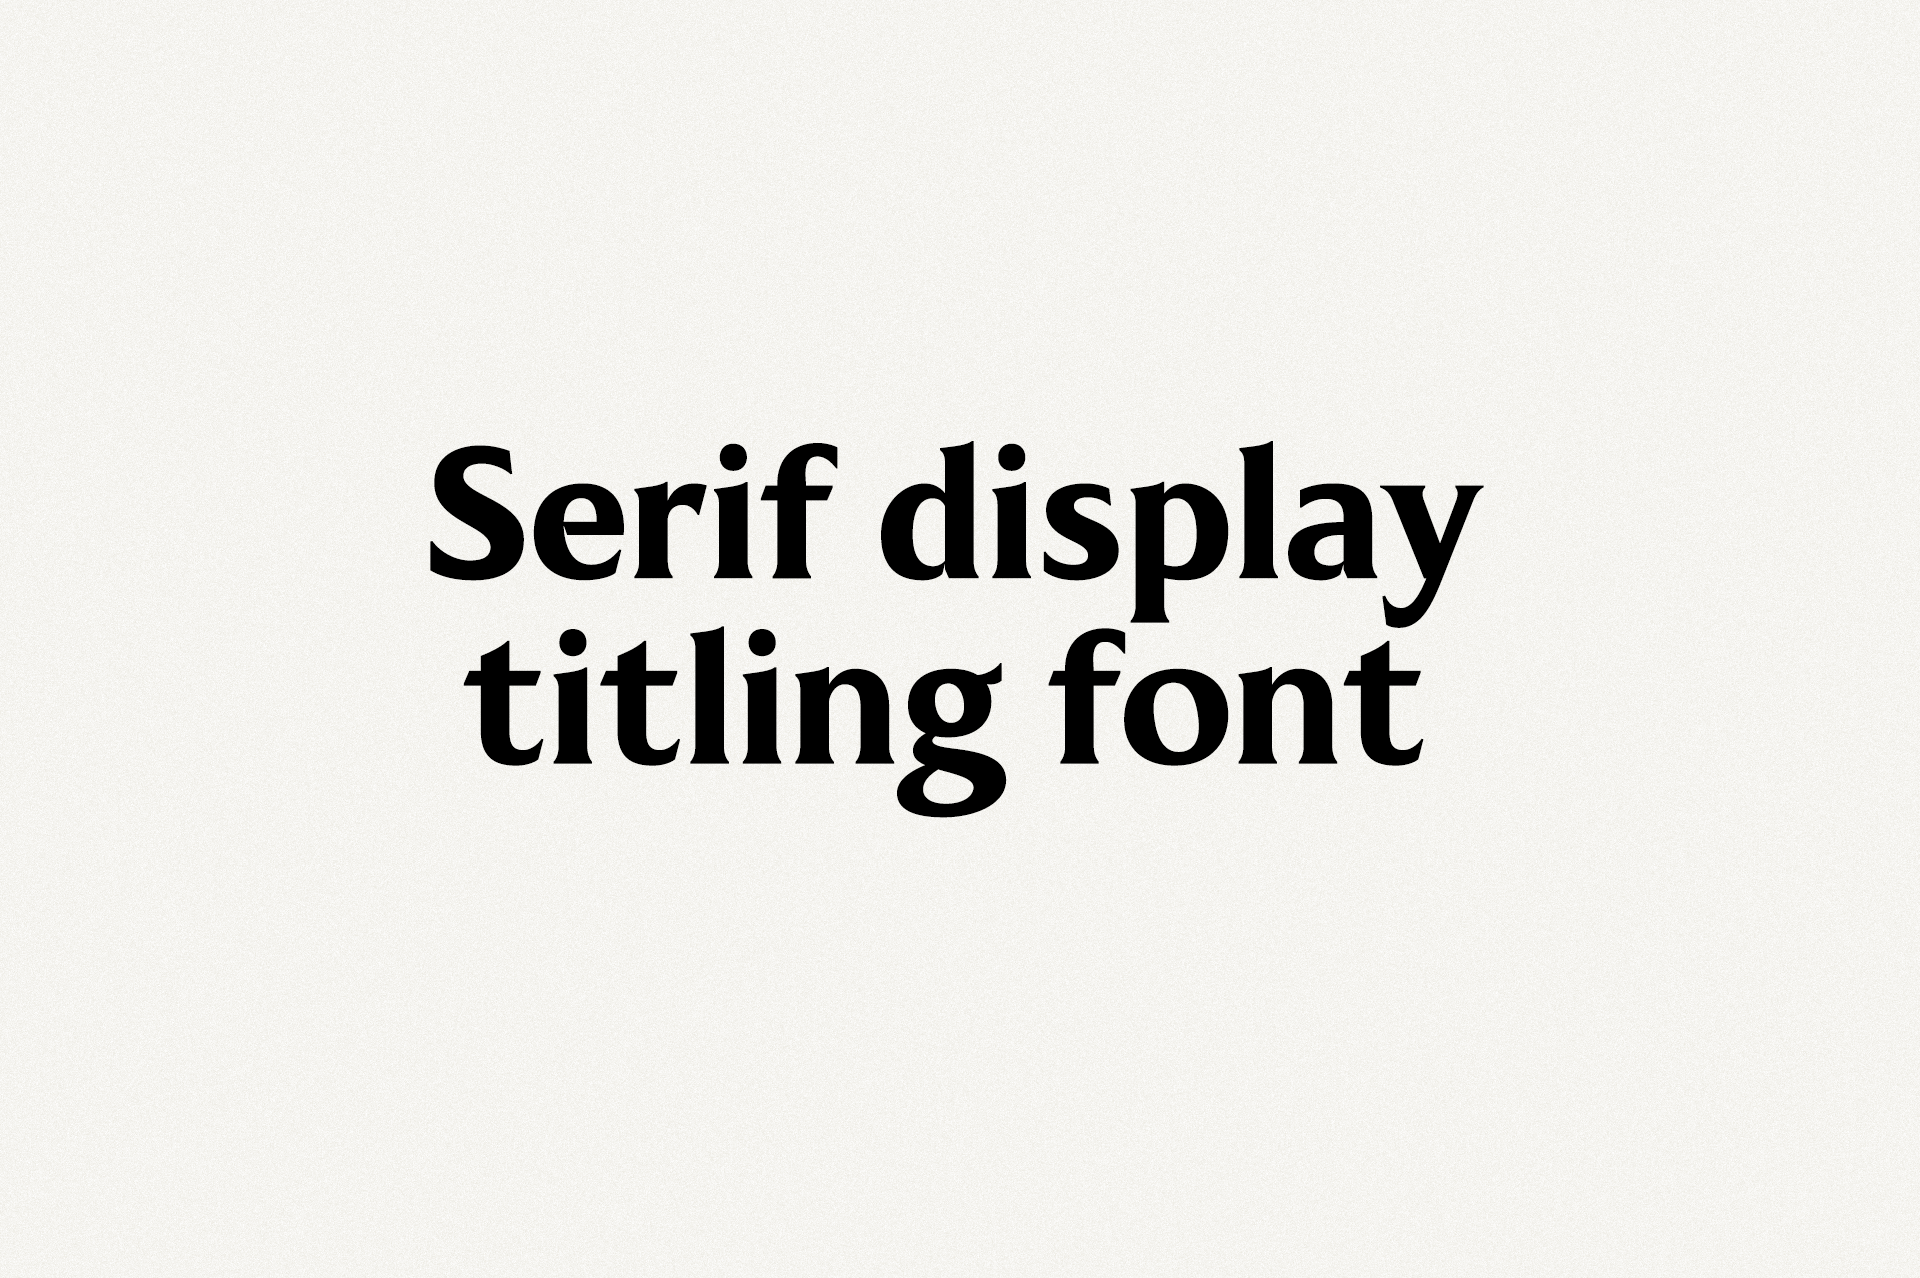 Kenfolg Free Font - serif